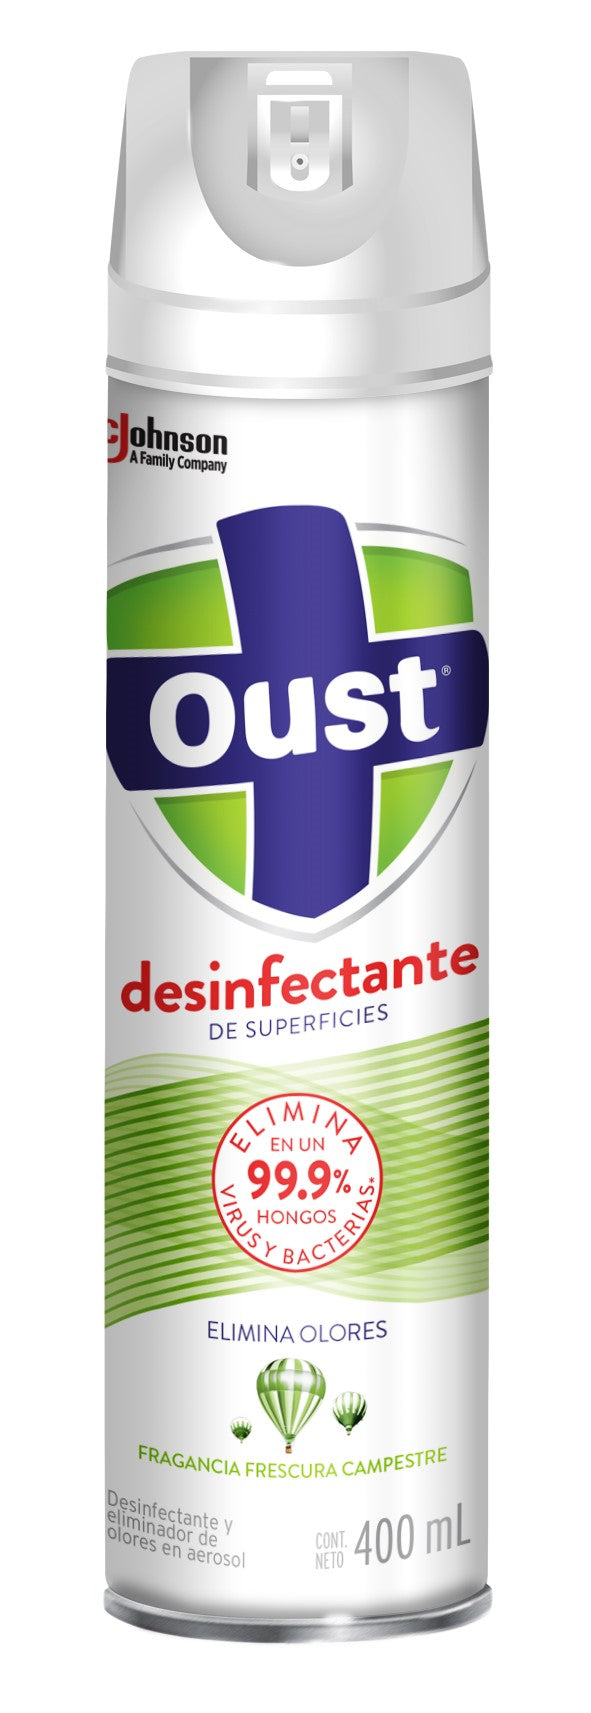 Oust Desinfectante Frescura Campestre - 400ml